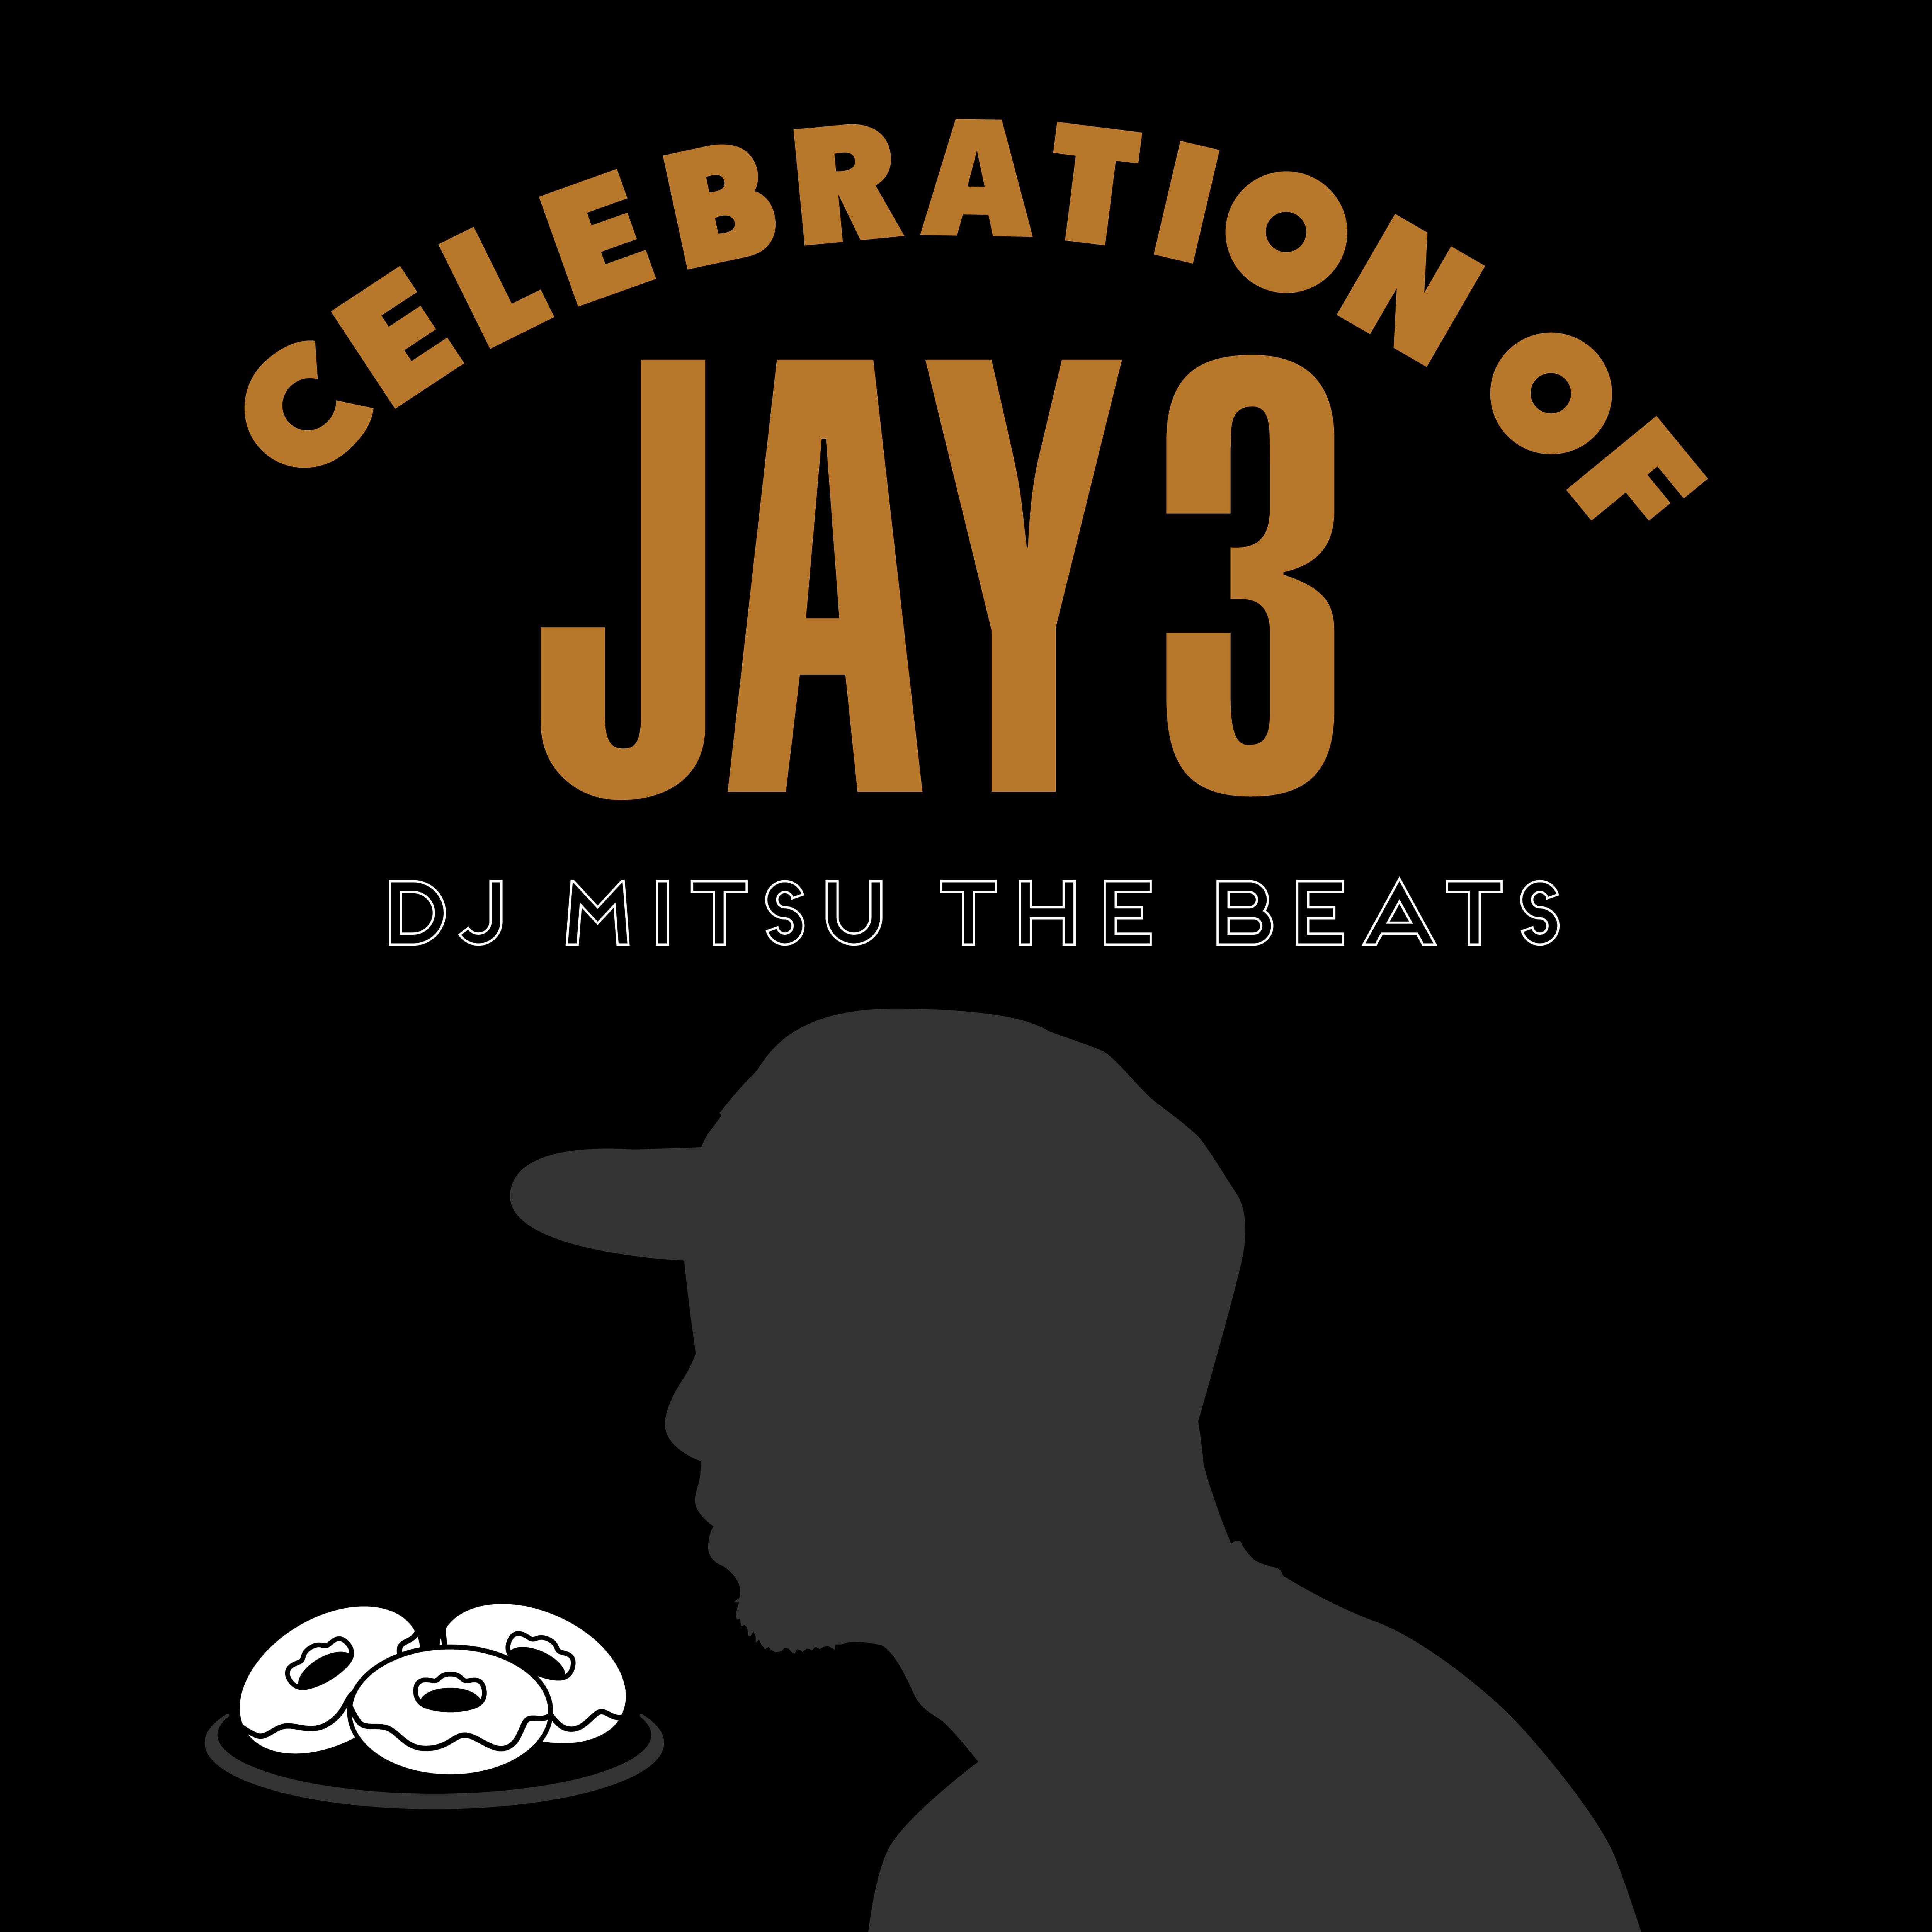 【Digital Album】DJ Mitsu the Beats - Celebration of Jay 3